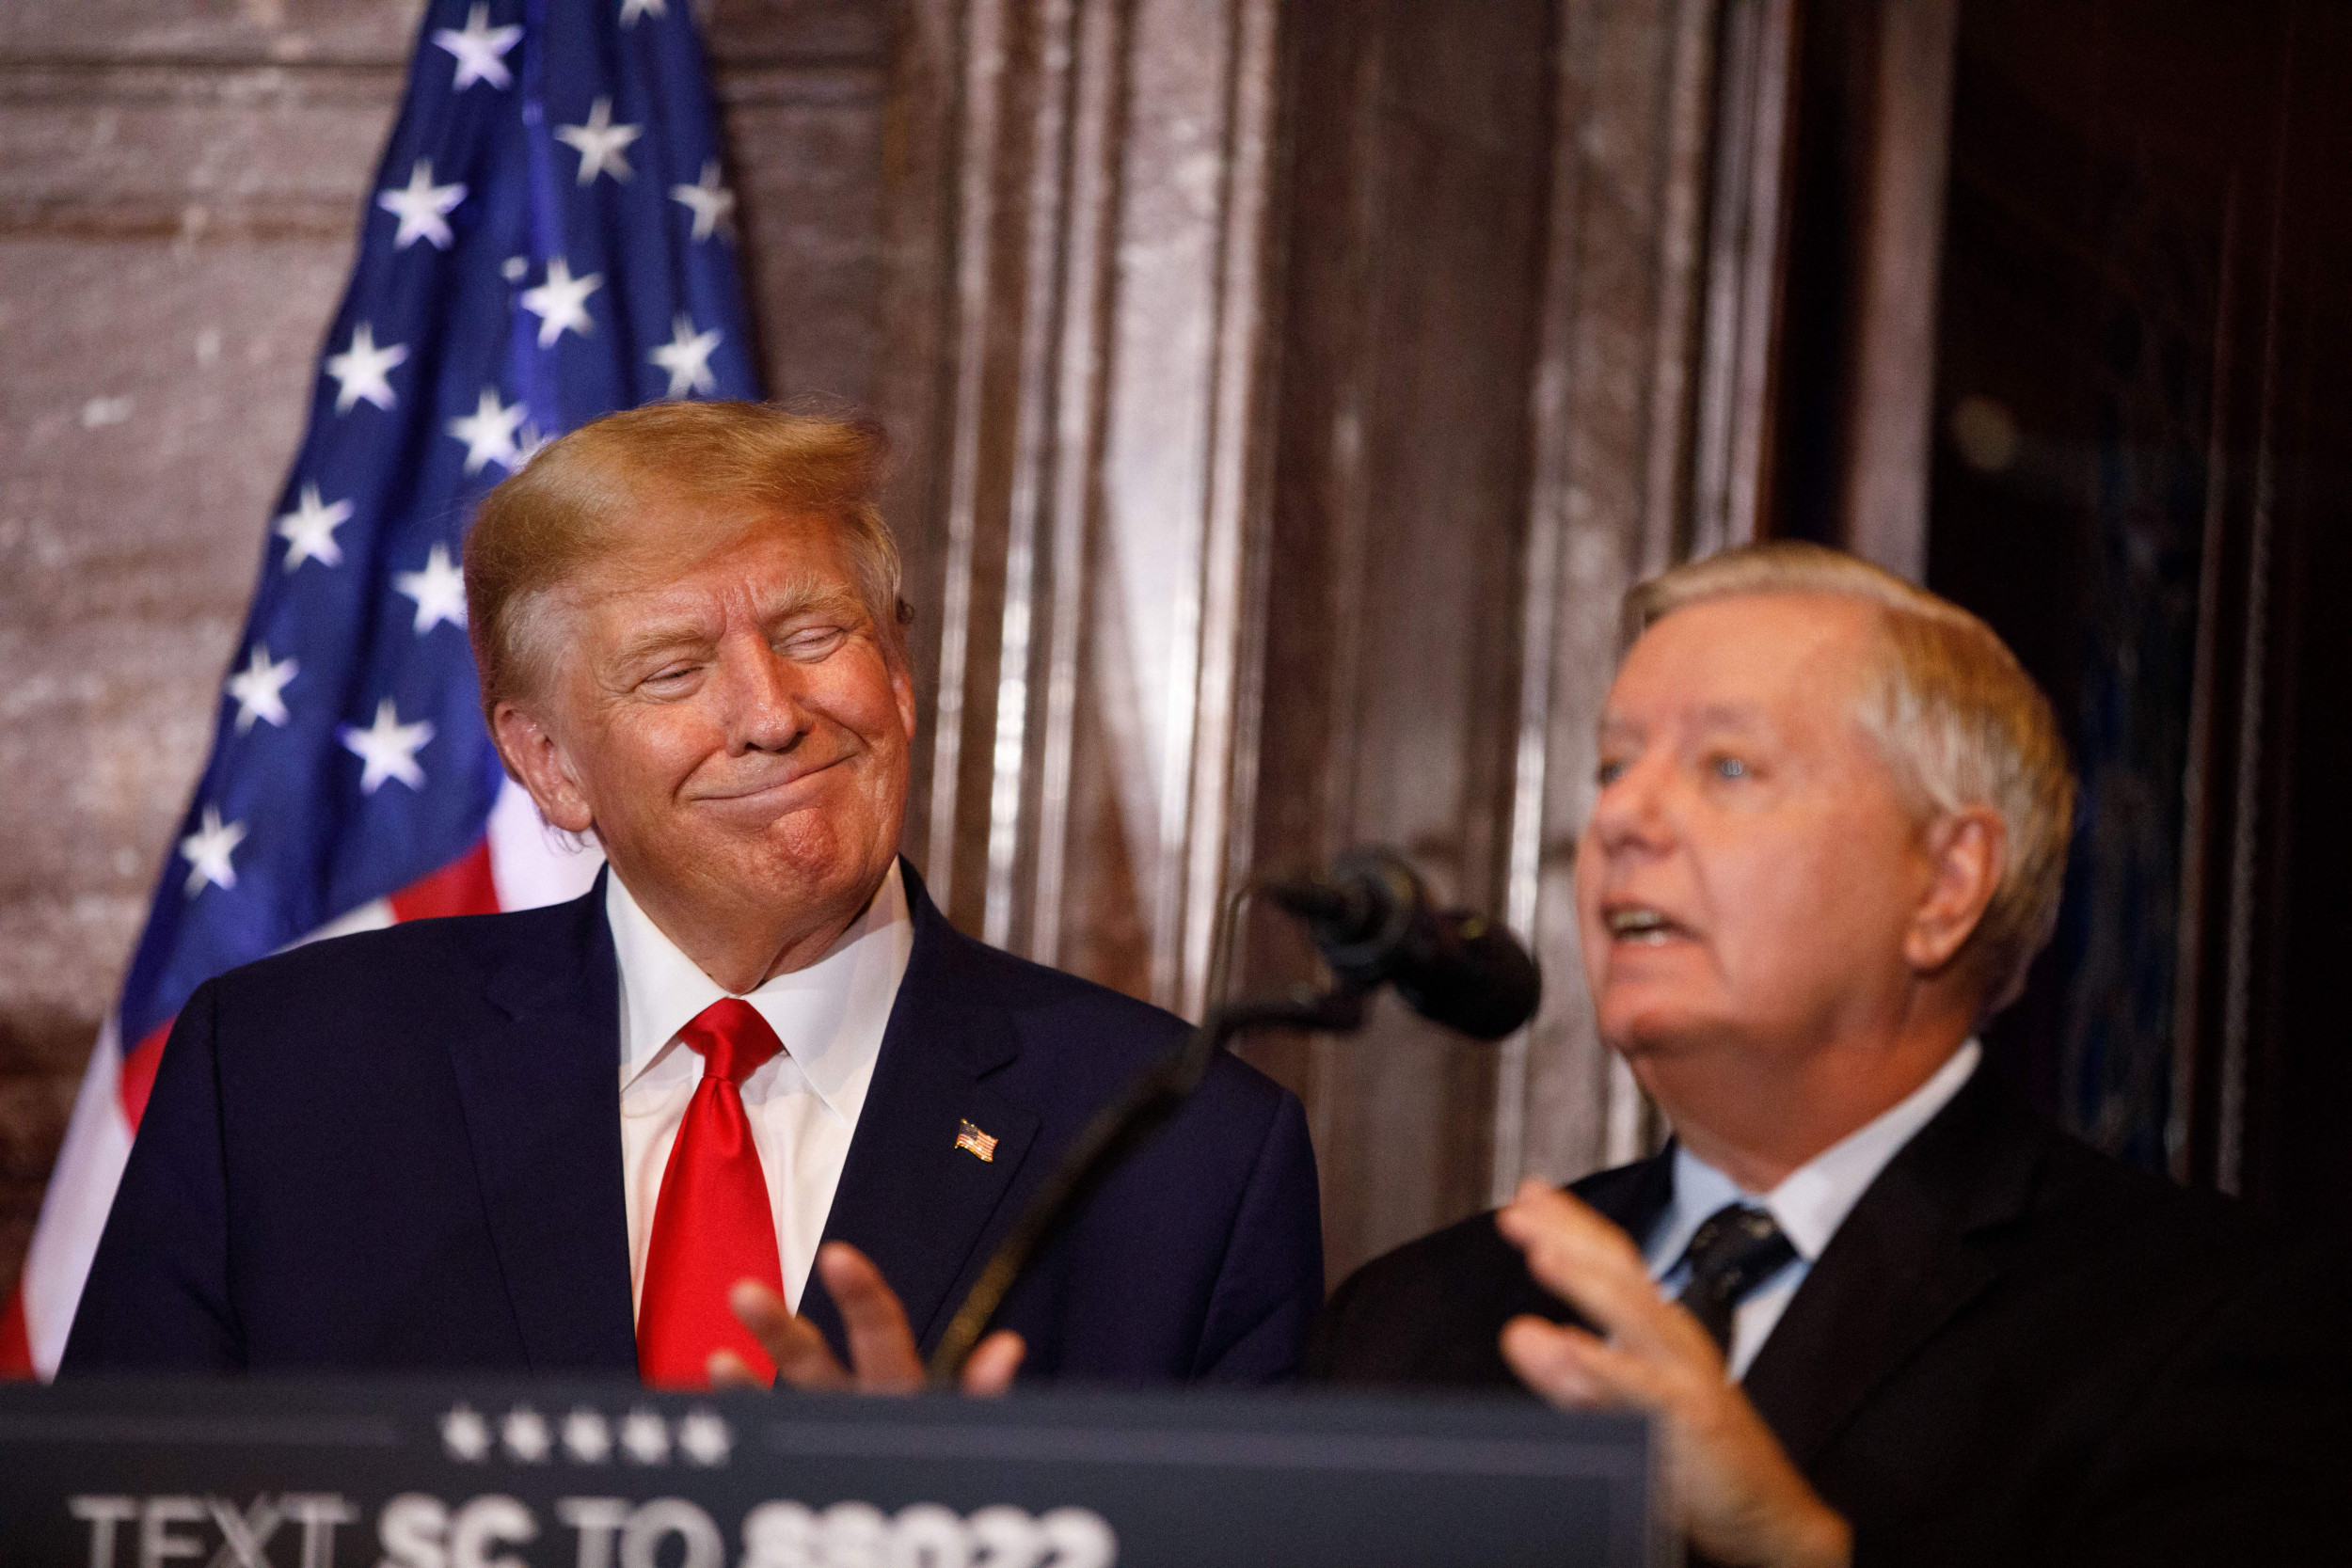 Lindsey Graham tells Donald Trump: “I love you”